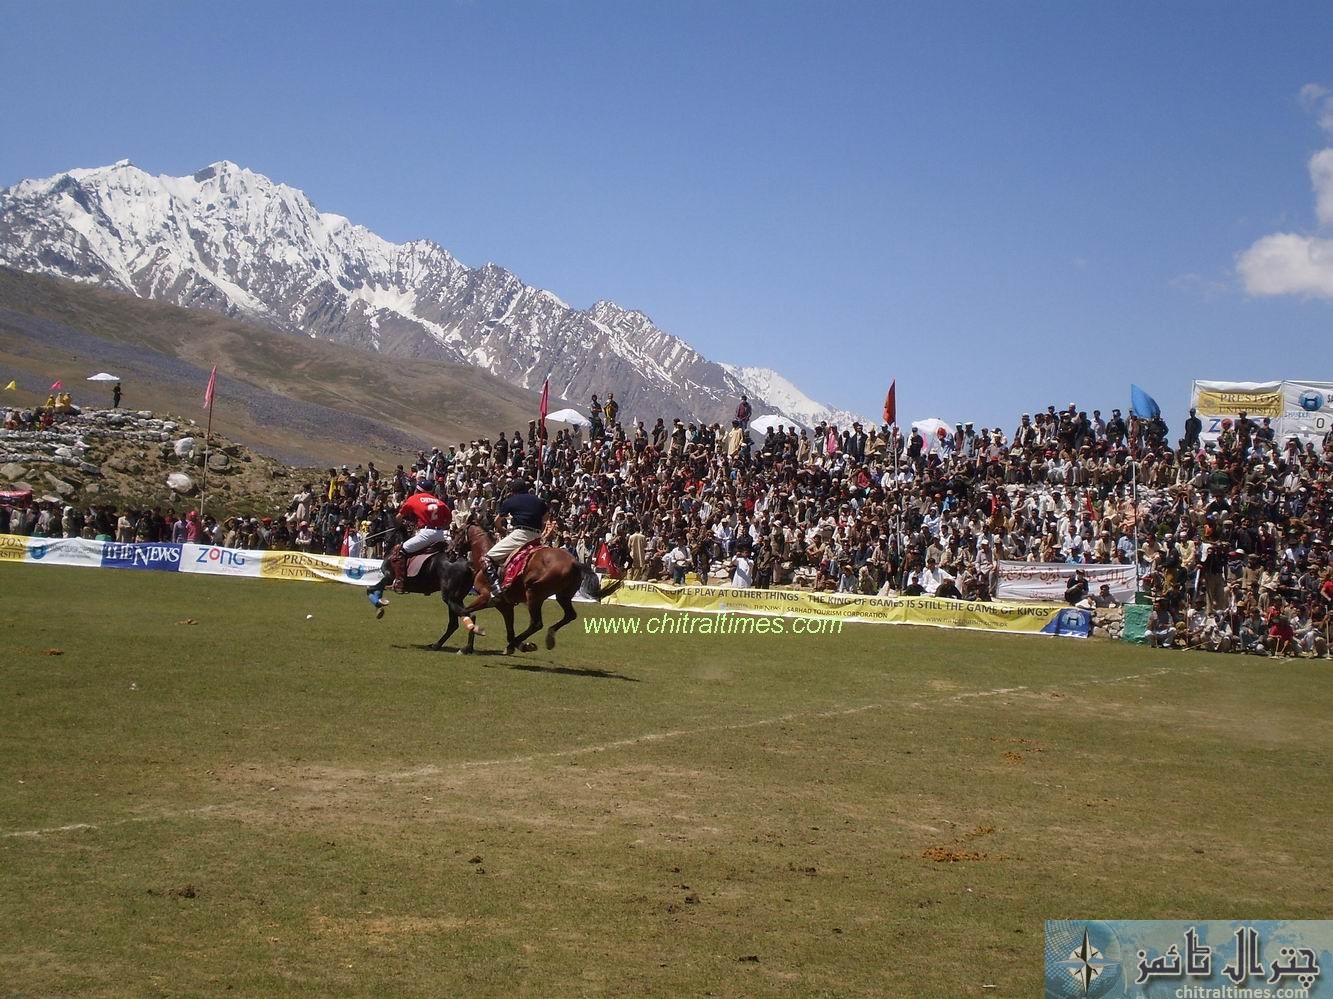 CHITRAL Free style polo at Shandur Chitral pic by Saif ur Rehman Aziz